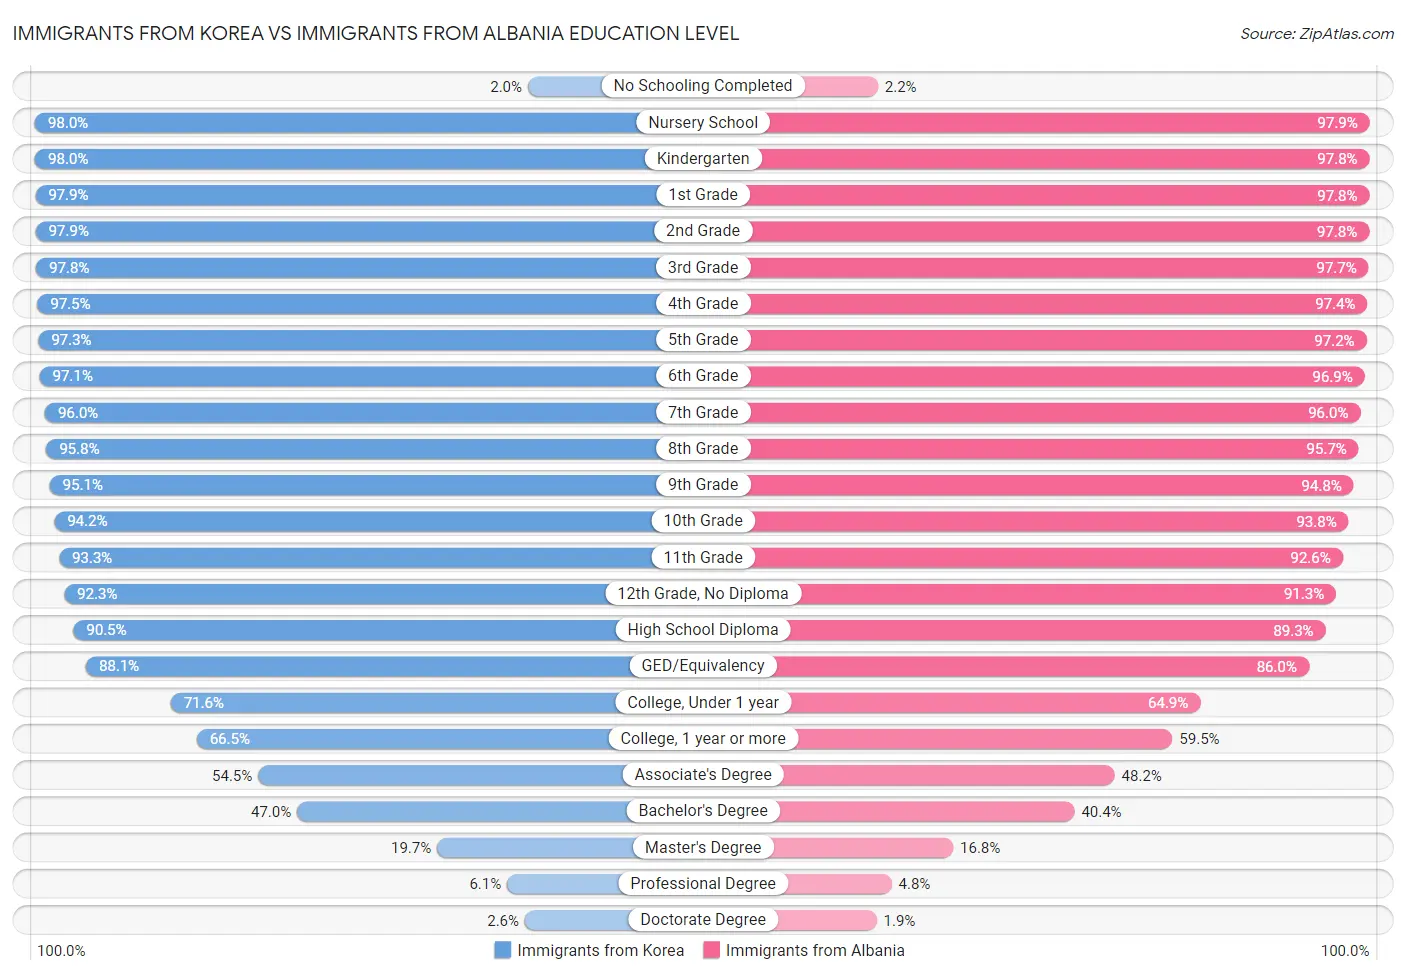 Immigrants from Korea vs Immigrants from Albania Education Level